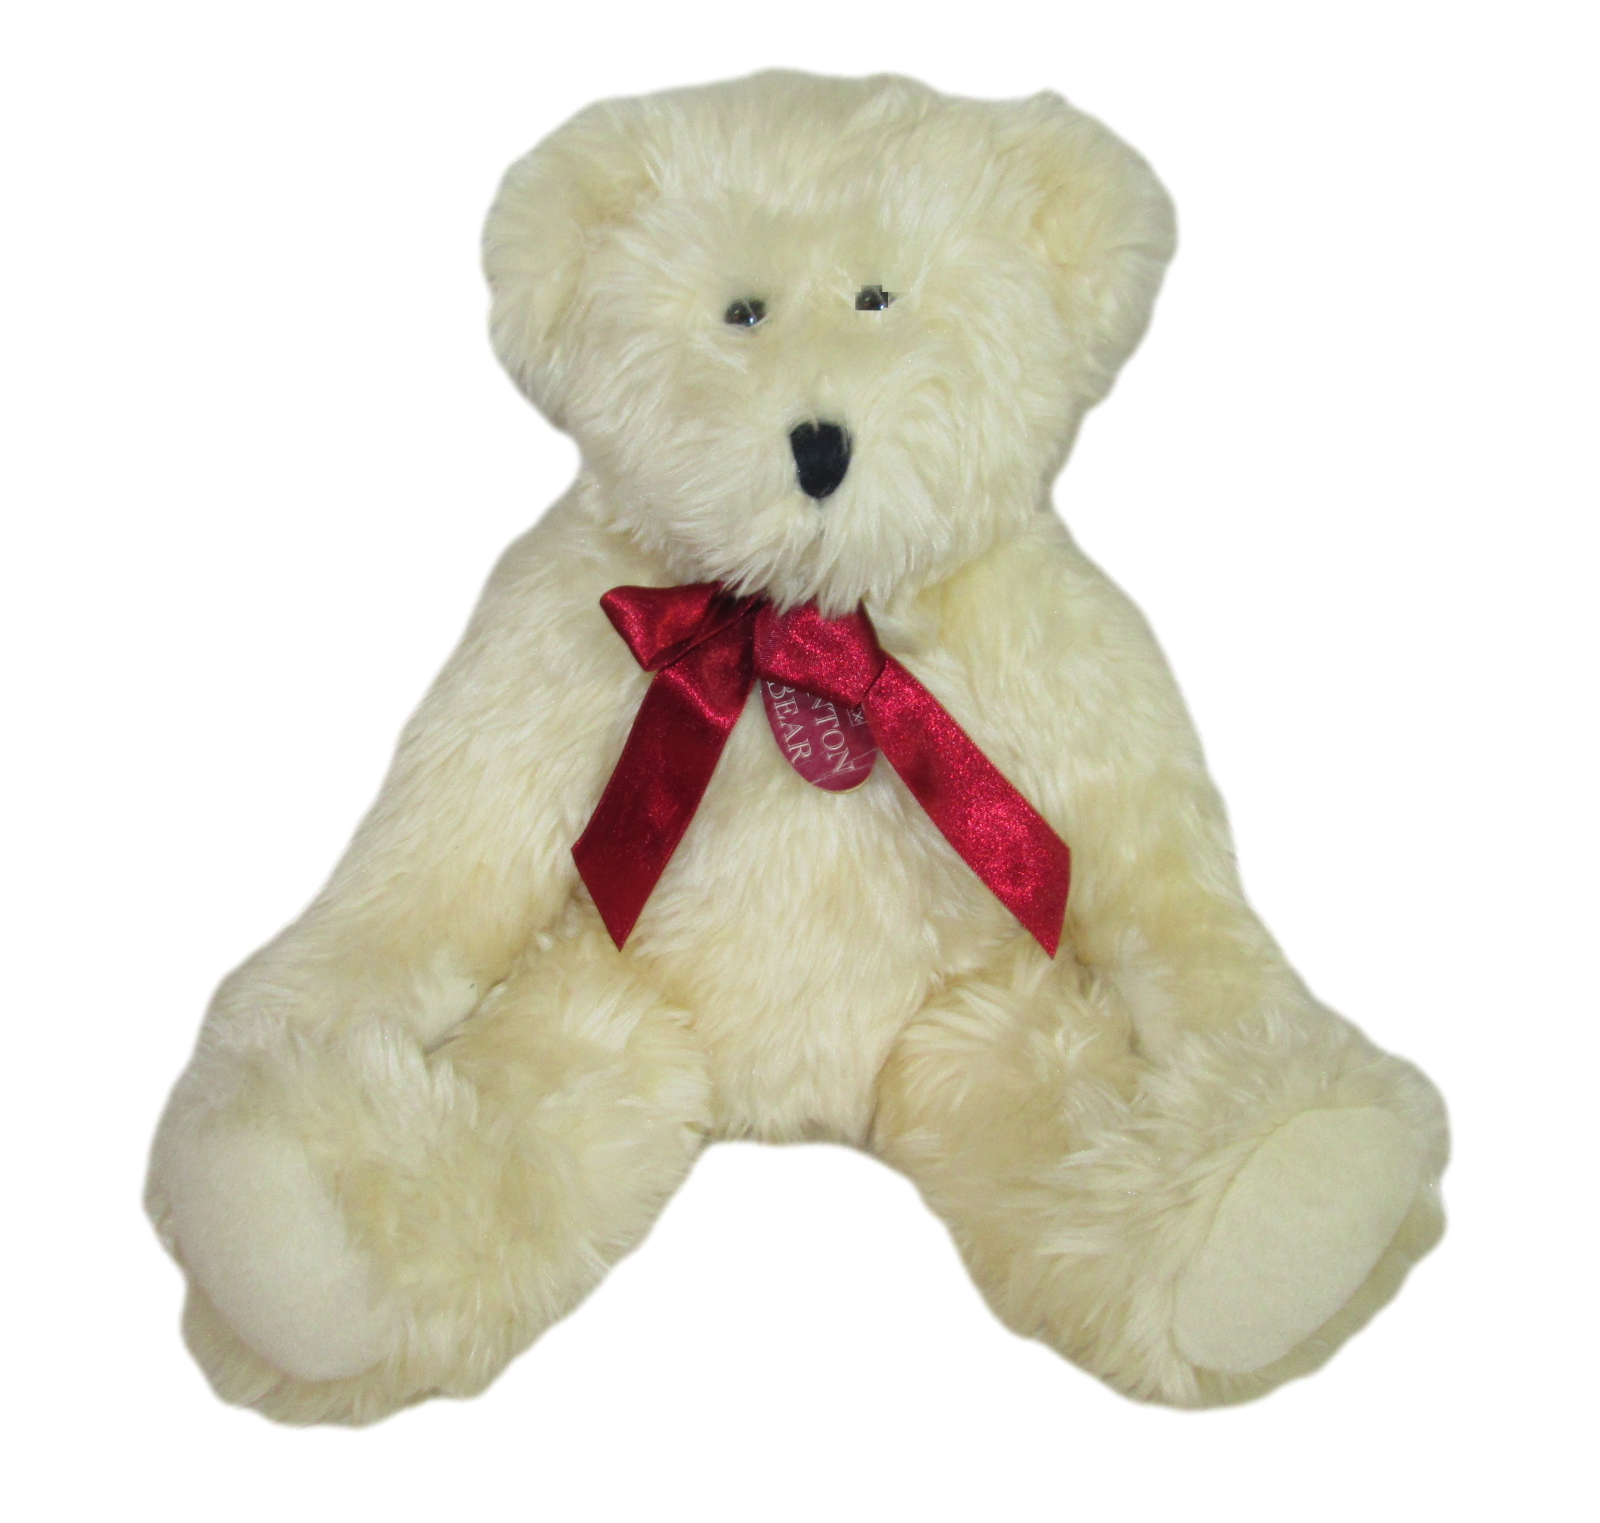 Primary image for Benton Teddy Bear Plush 12" Vintage 1998 Matrix Ivory JcPenny Stuffed Animal